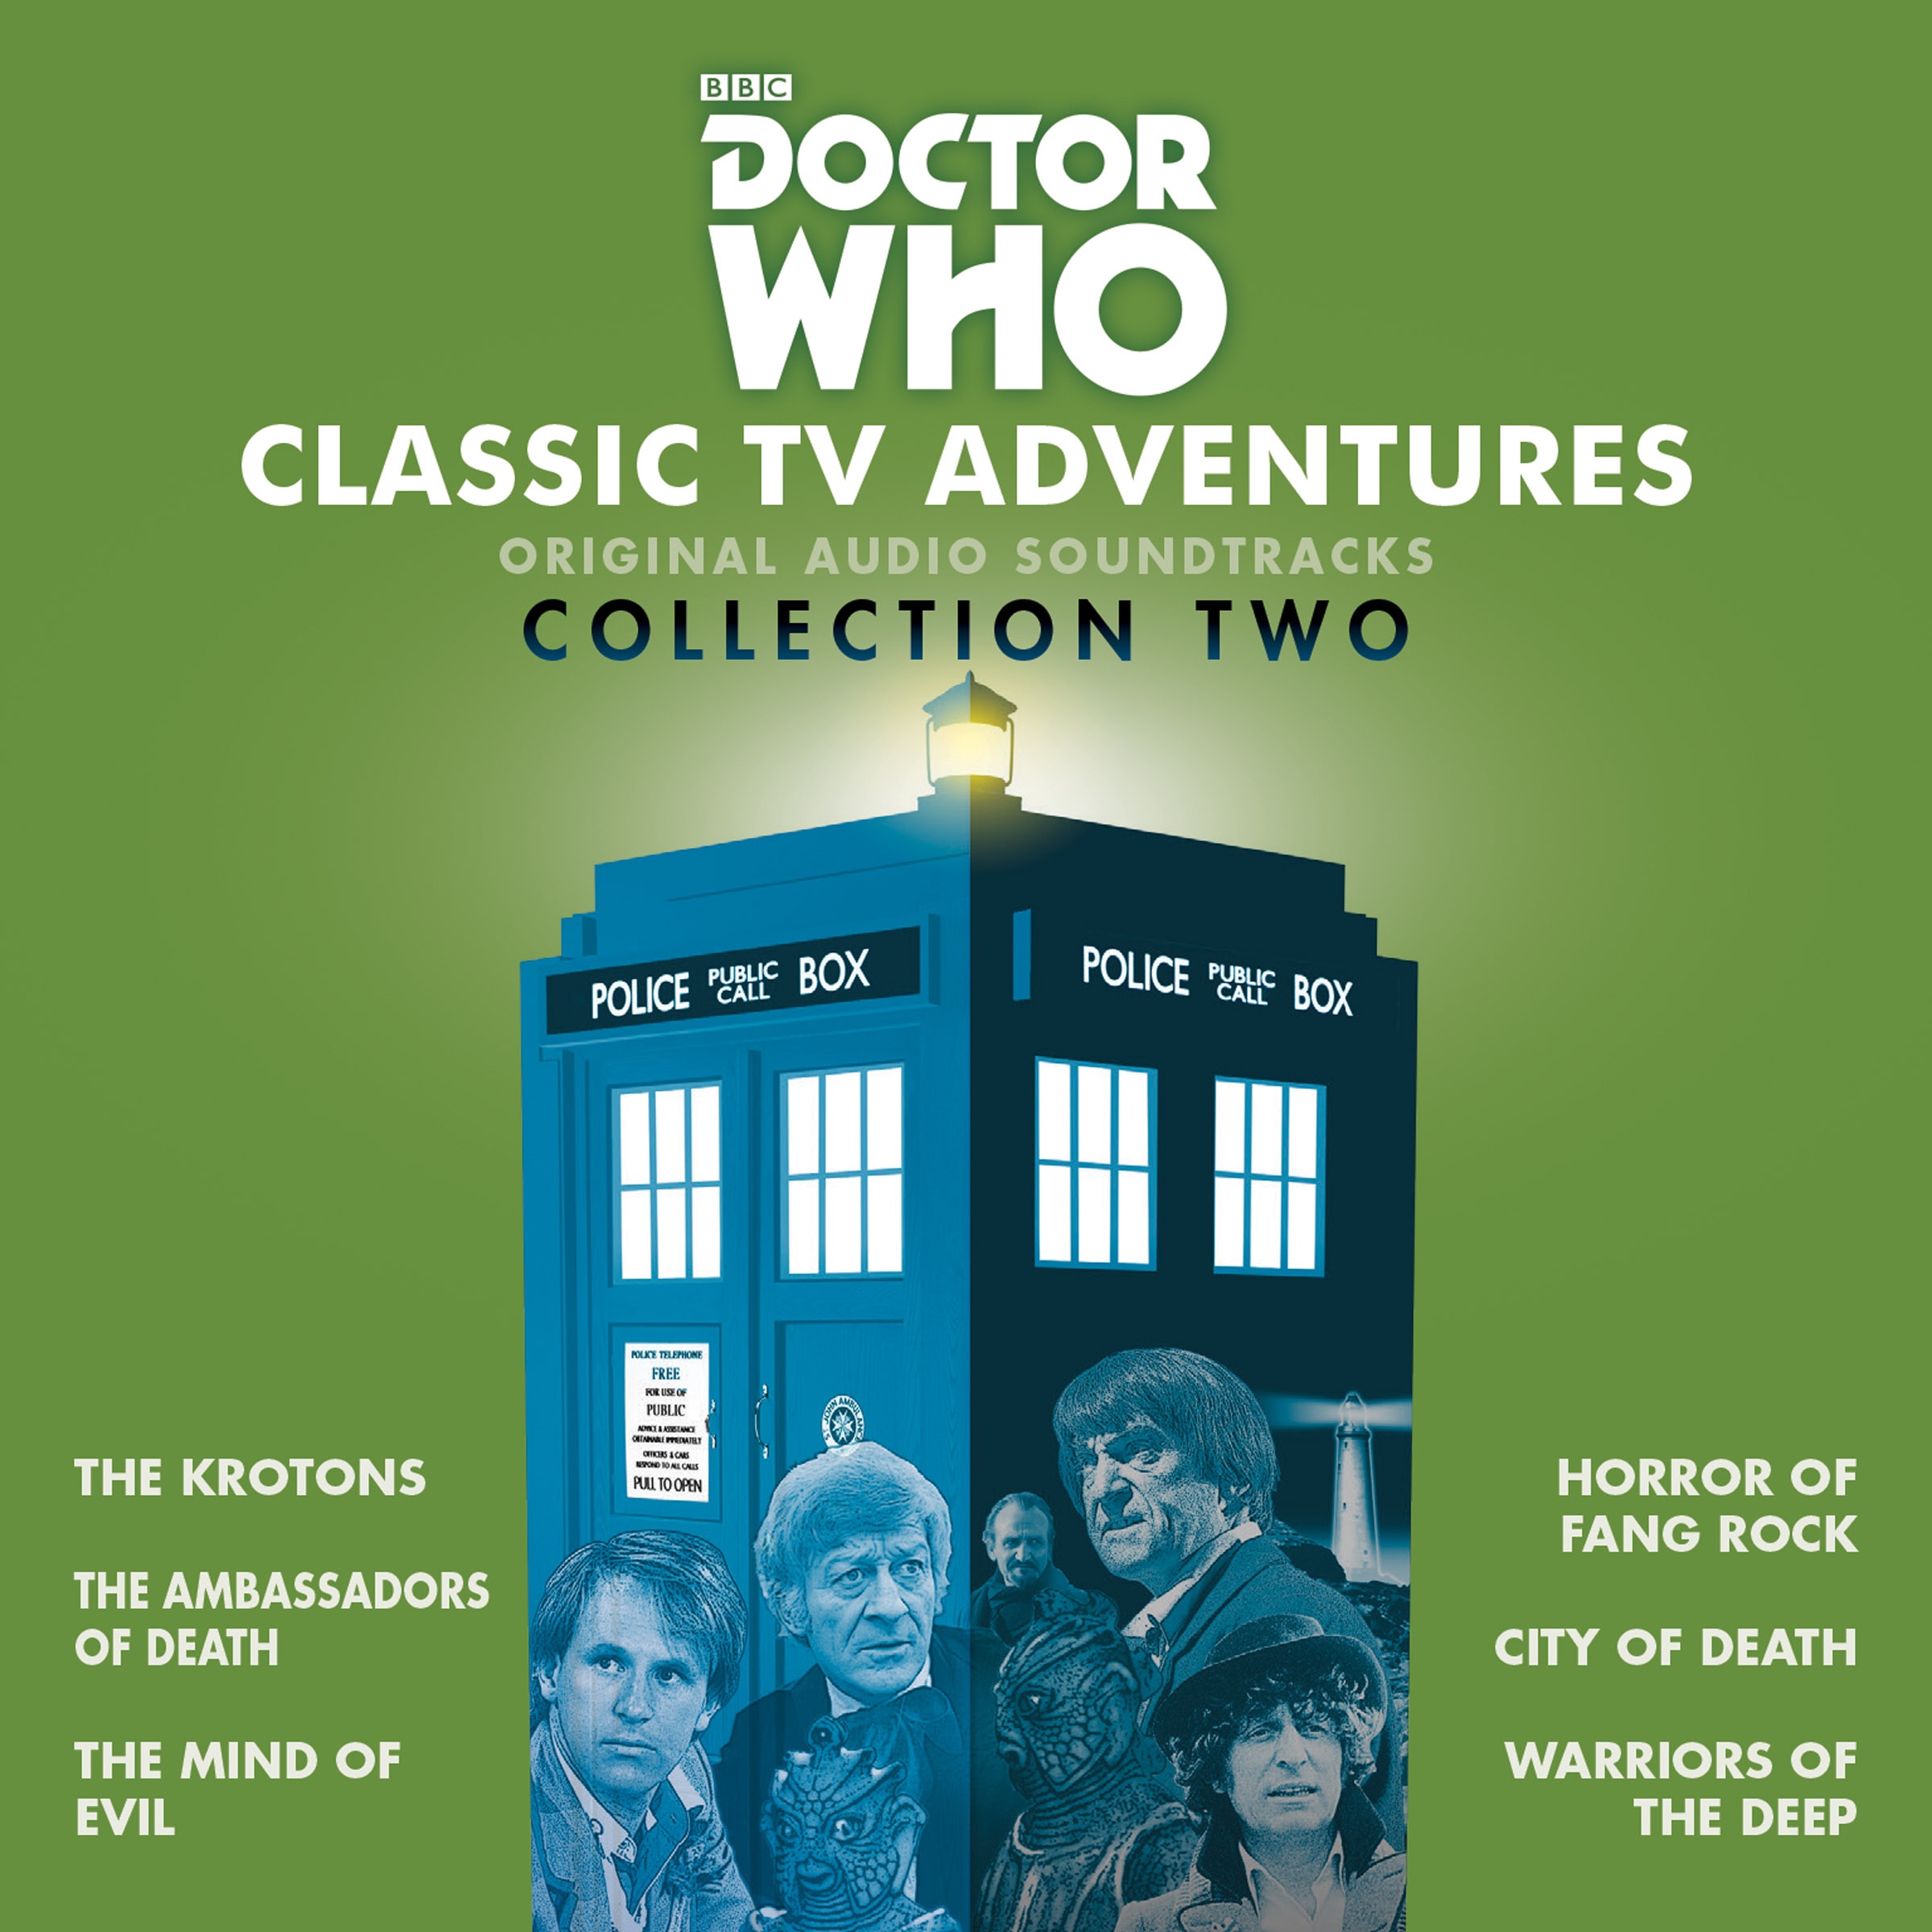 Doctor Who Classic TV adventures on audio